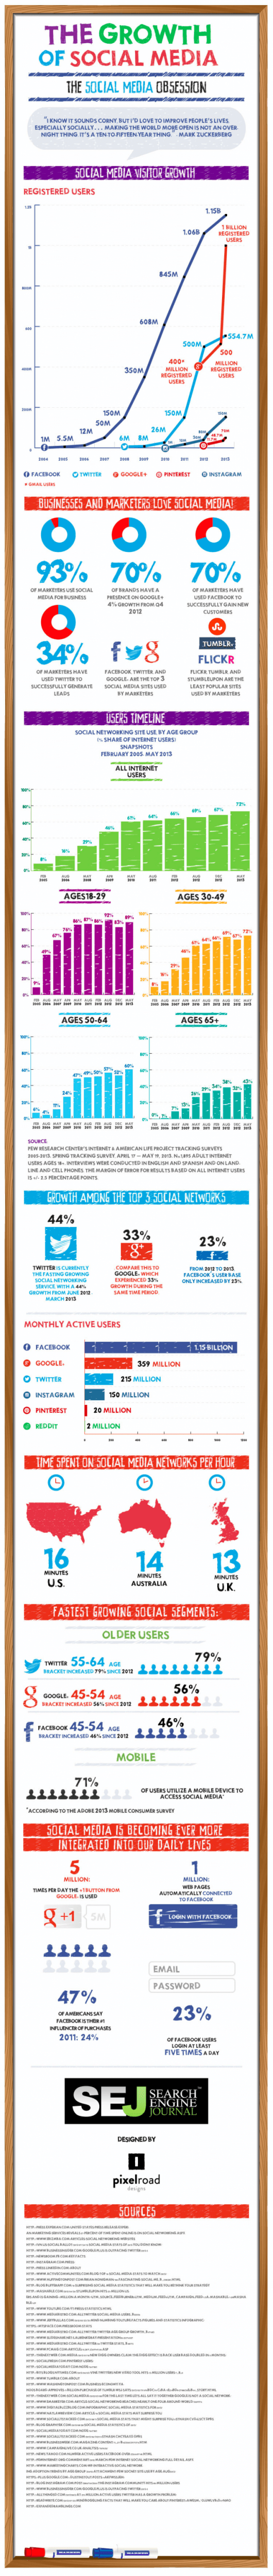 growth-of-social-media-2013-637x6021